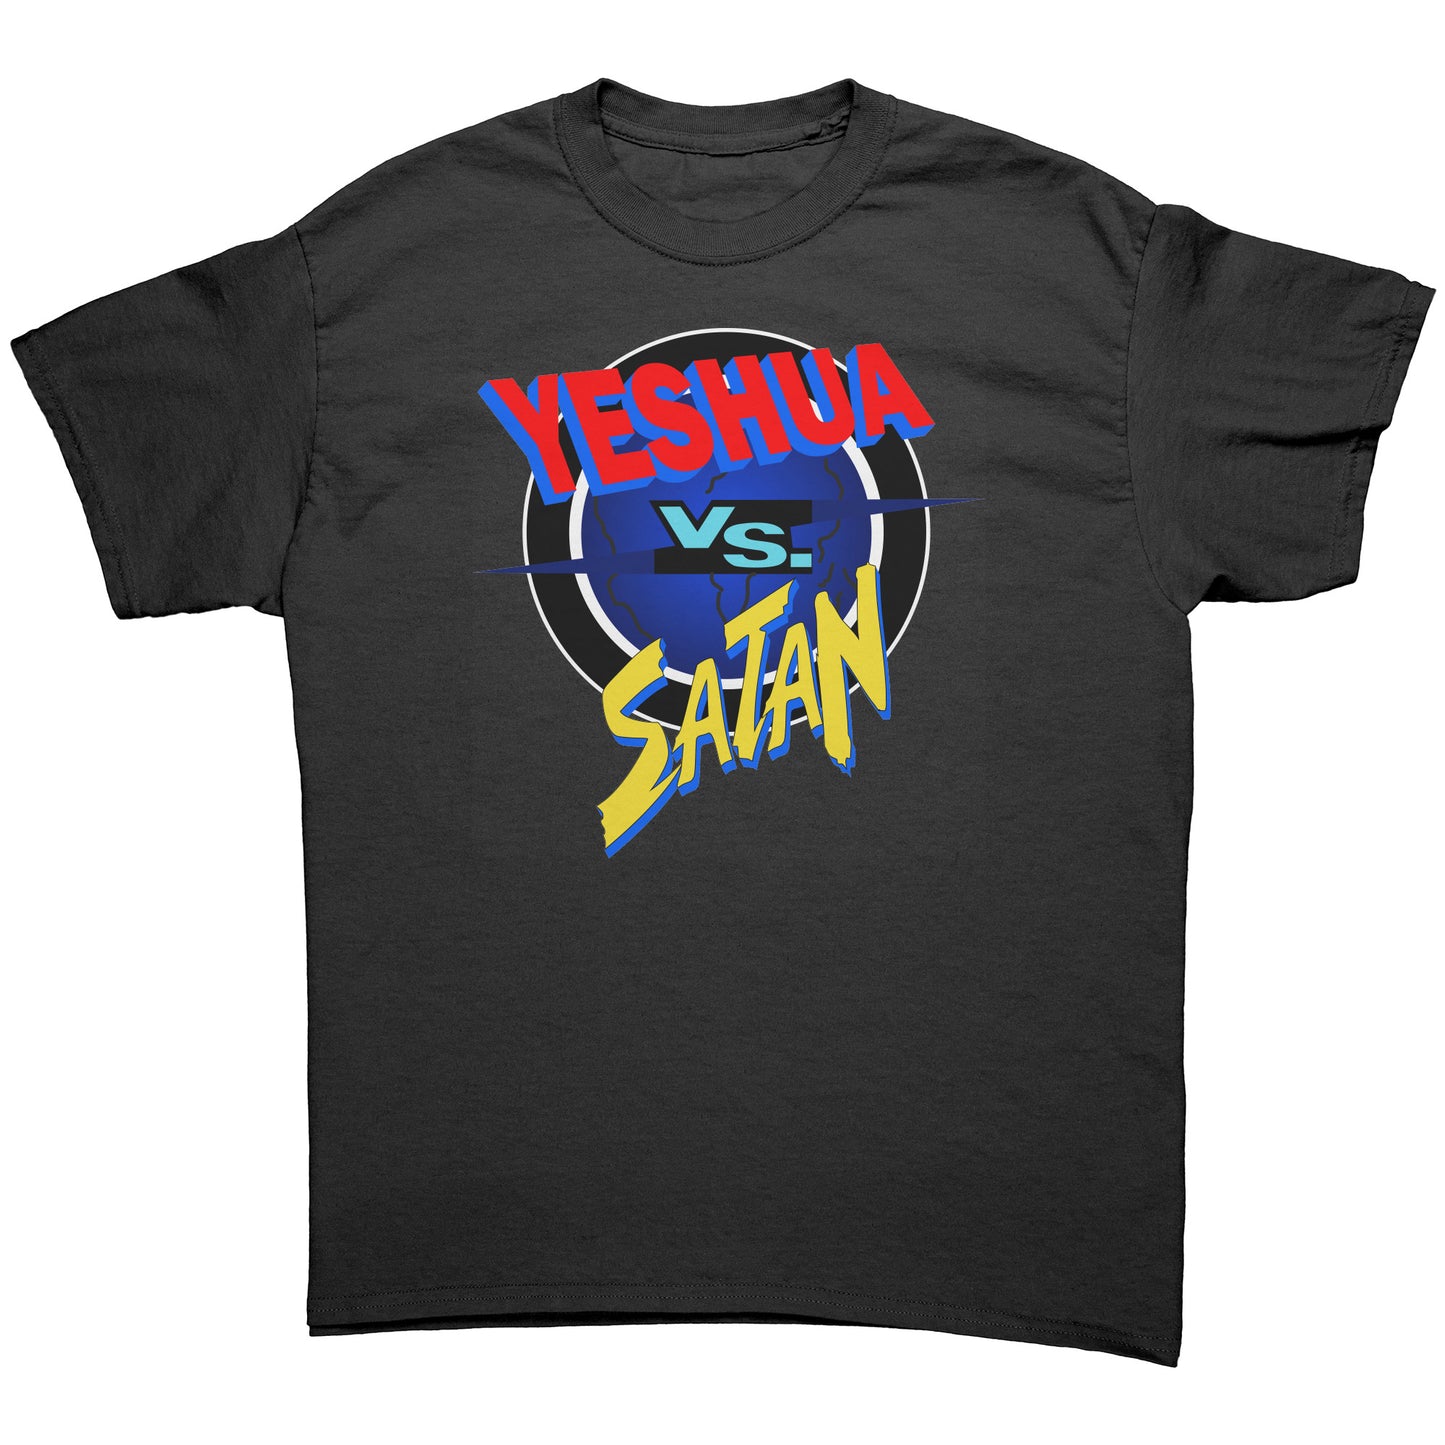 Yeshua vs Satan Men's T-Shirt